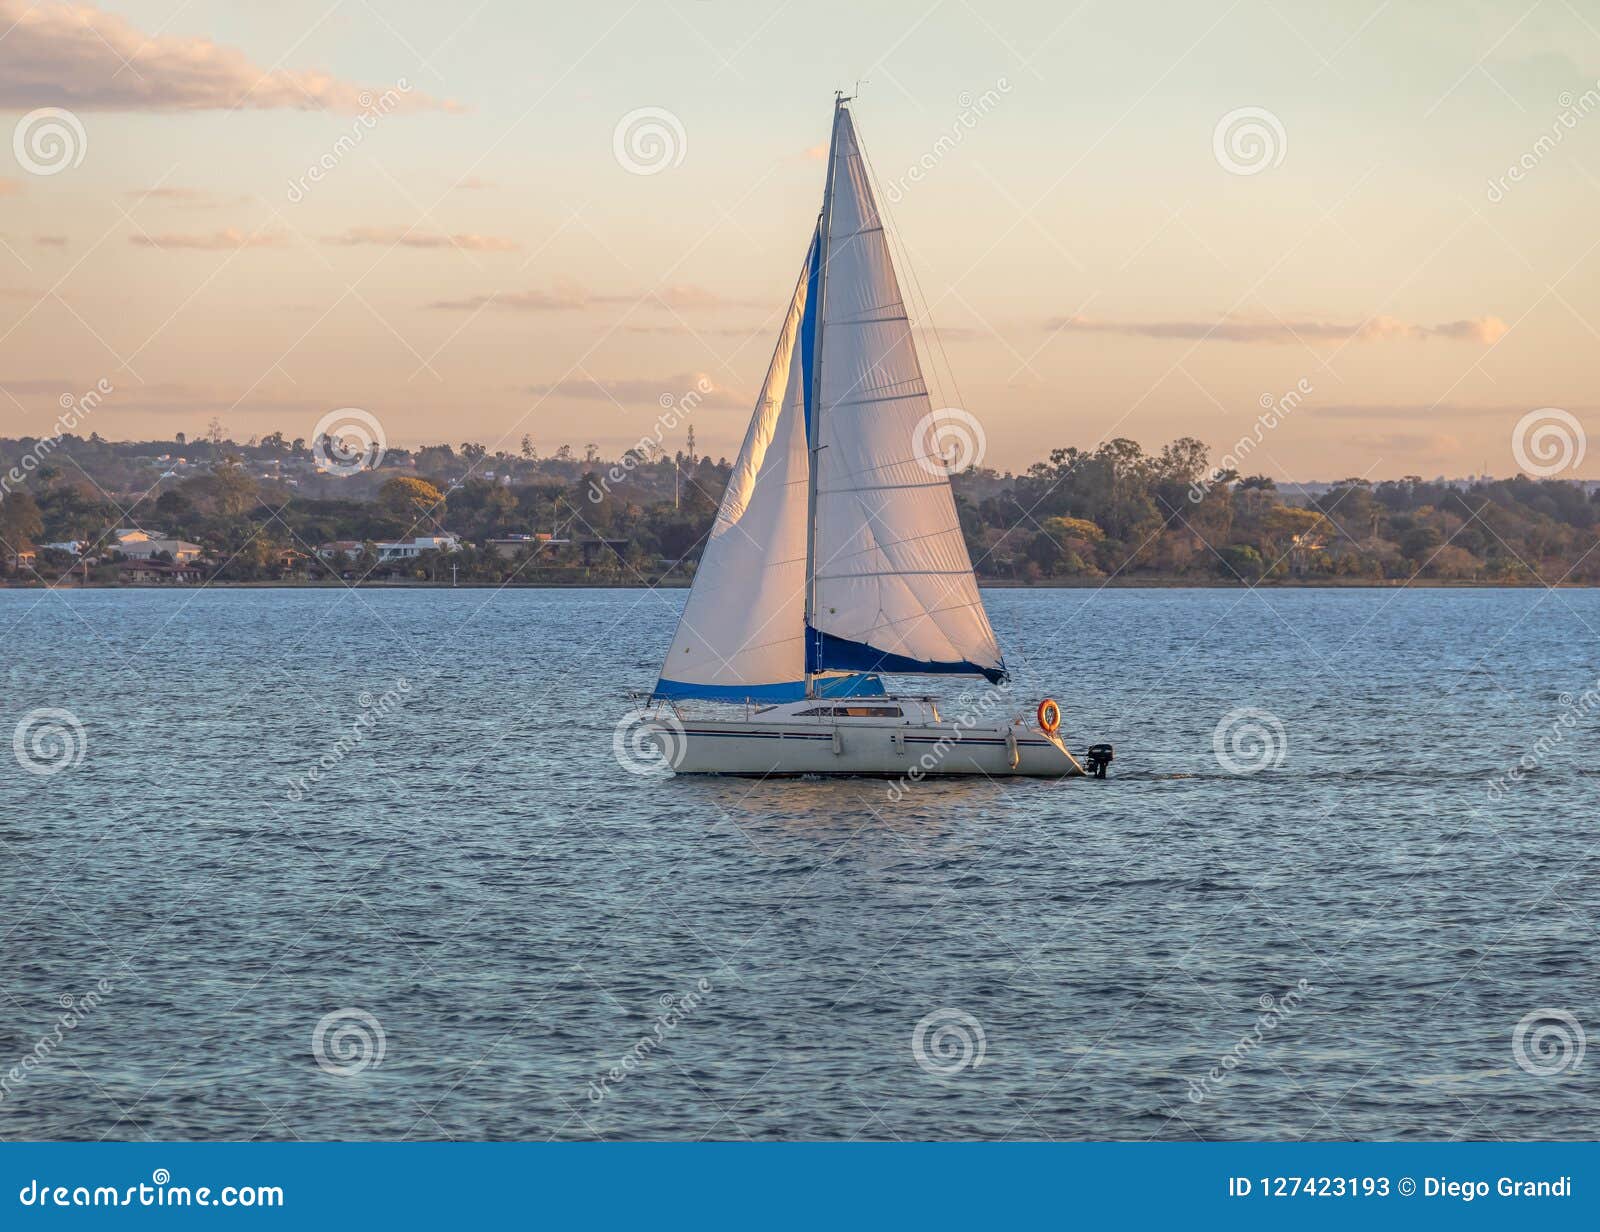 sailboat at paranoa lake - brasilia, distrito federal, brazil